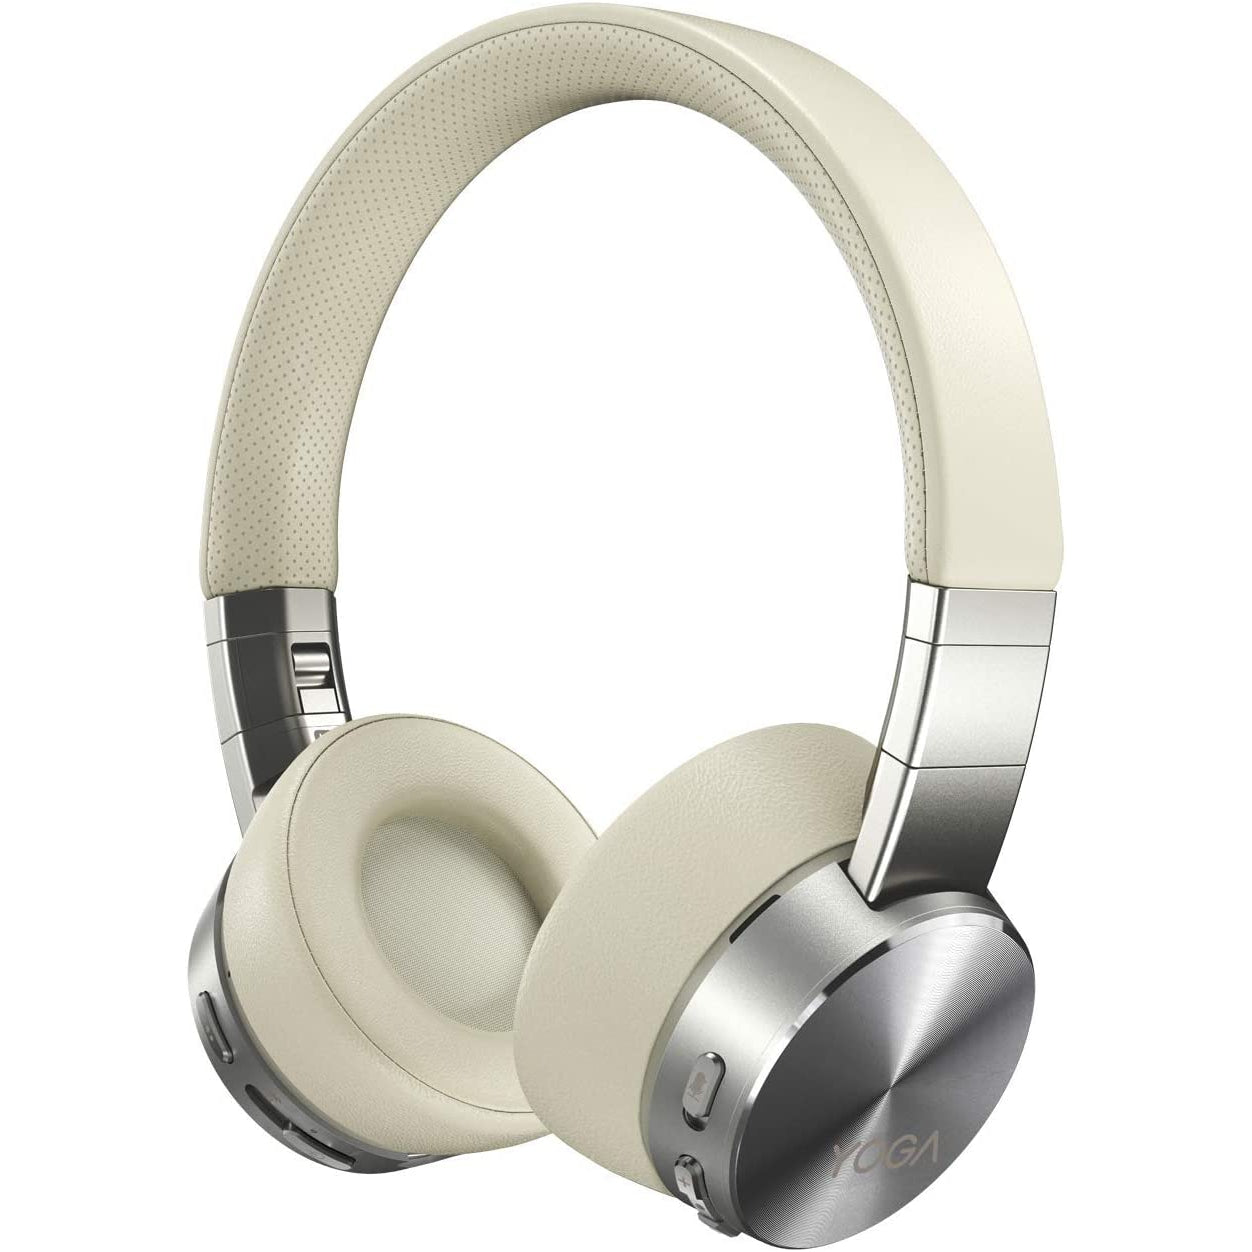 Lenovo Yoga Active Noise Cancellation Headphones - Refurbished Pristine